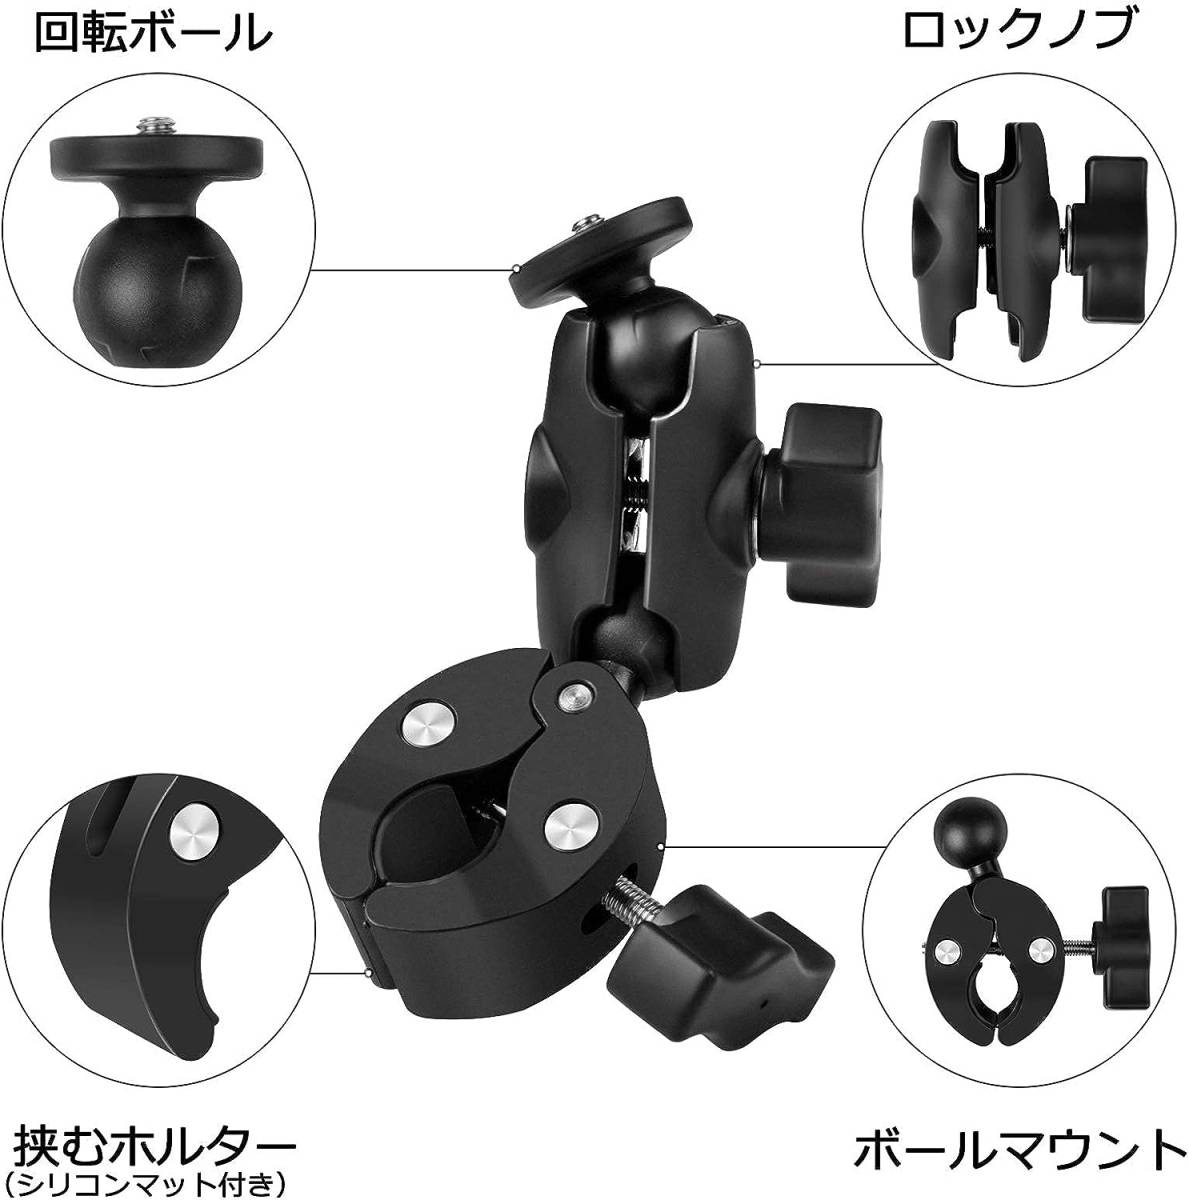 GoPro 互換 自転車・バイク・オートバイ用クリップマウント 1/4”ネジ対応可能 2点位置の360°回転 ウェアラブルカメラ・カメラ固定用